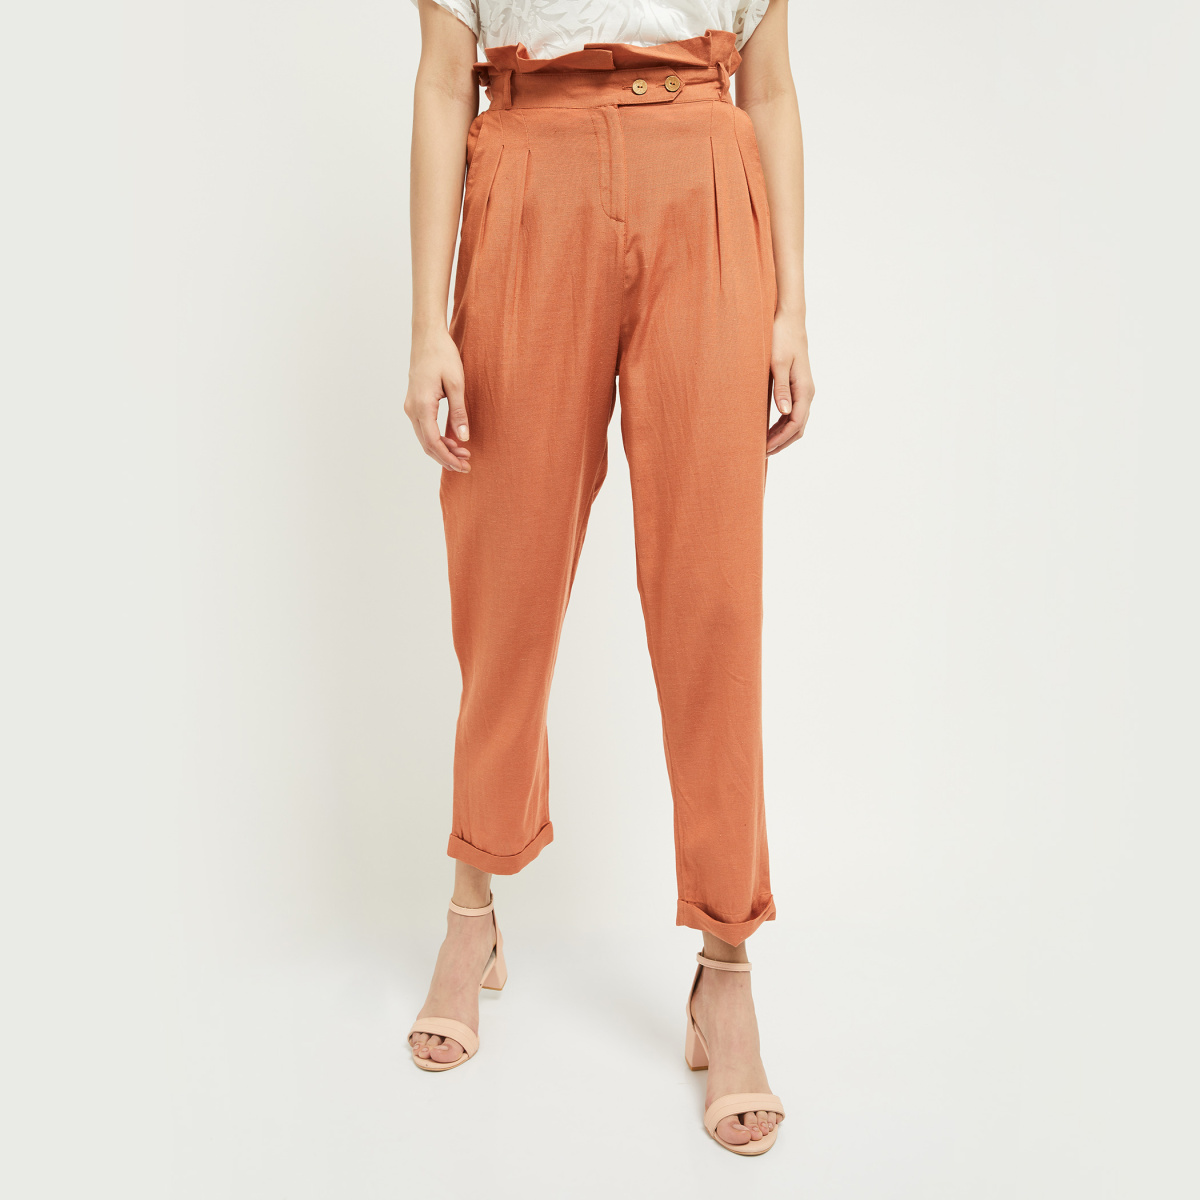 Tessi Khaki High Waist Paperbag Pants | Paperbag pants, Khaki pants outfit,  Balloon pants